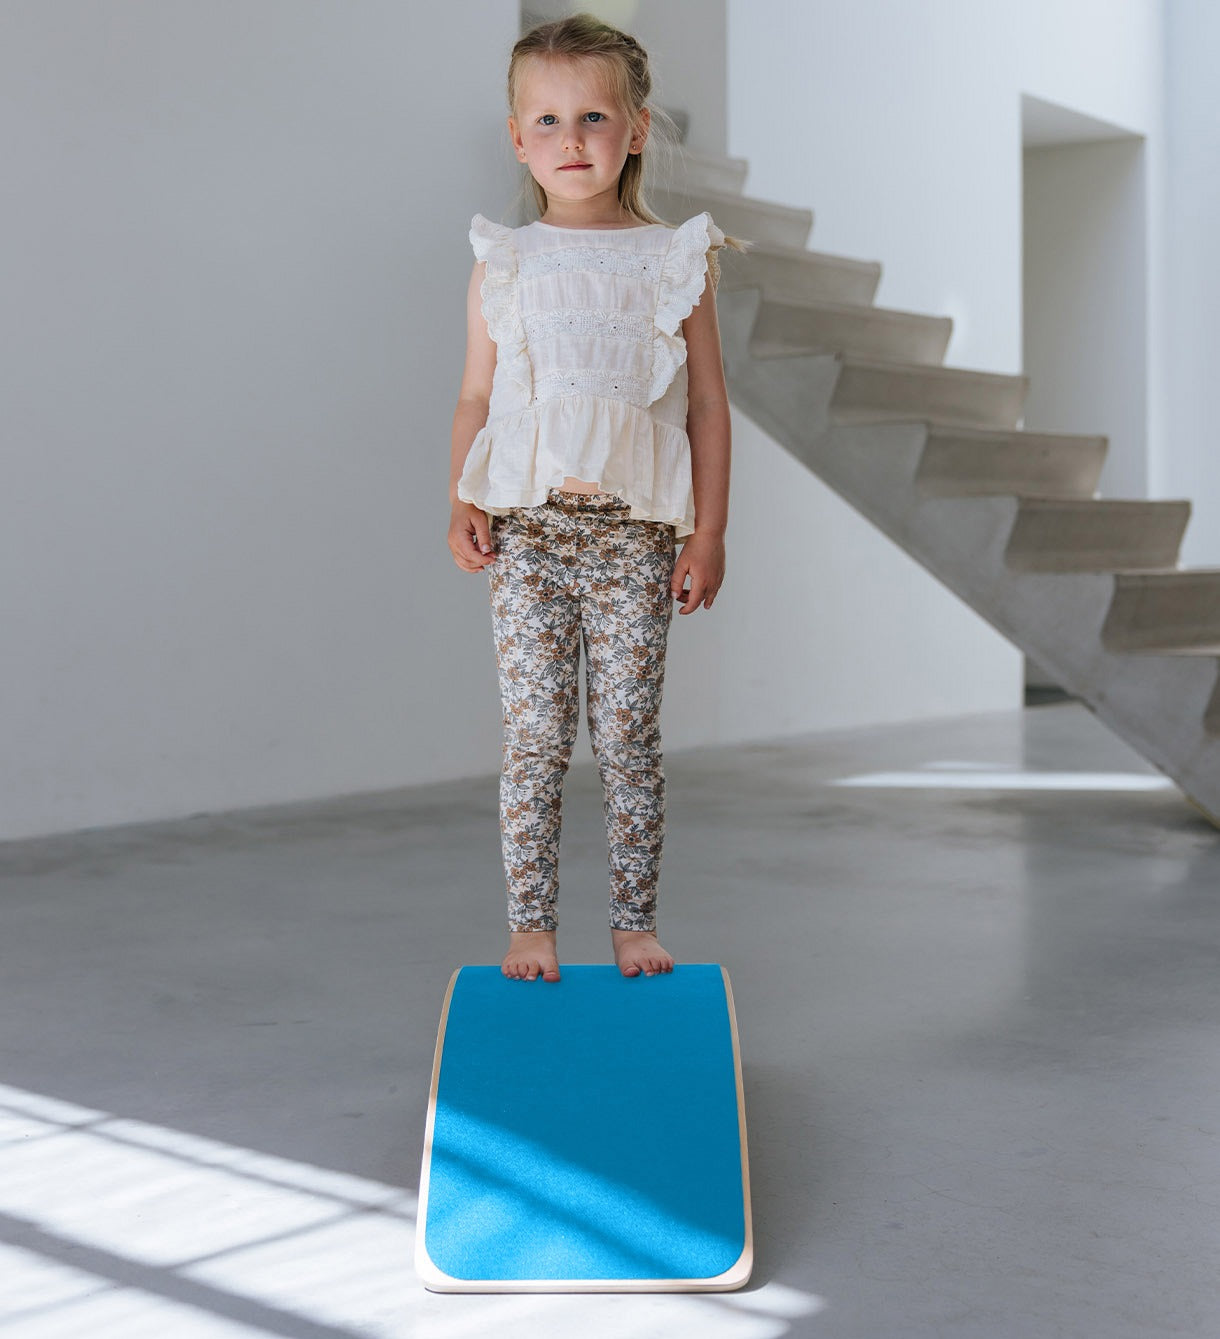 Balance board - hout - met hemelsblauw vilt